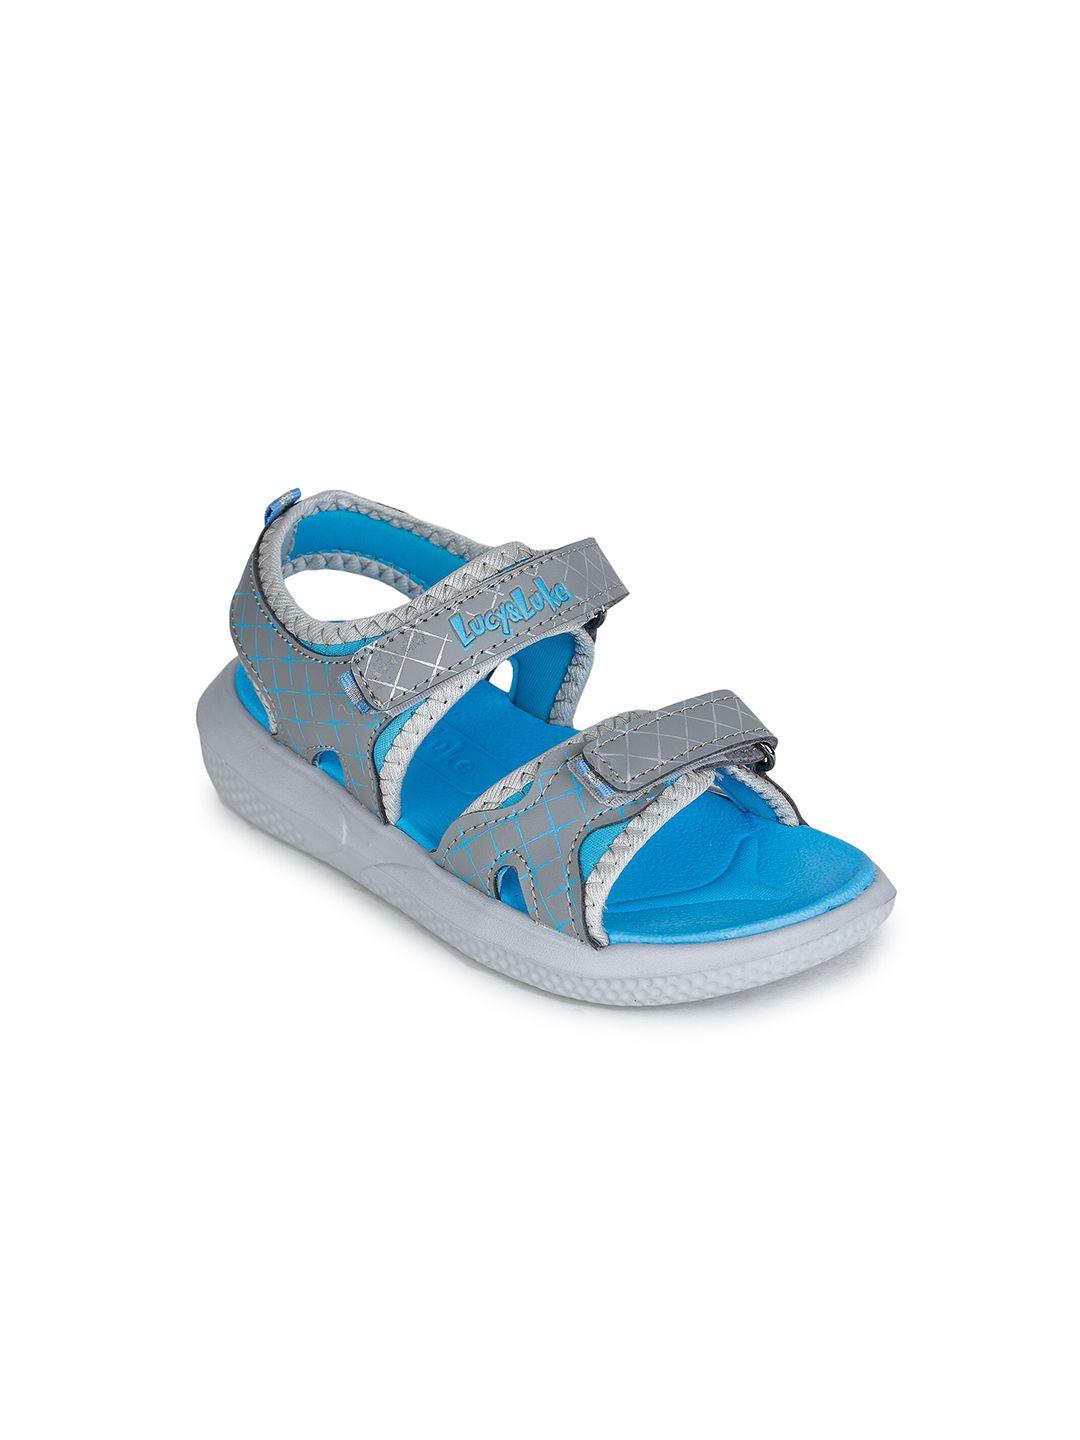 liberty kids grey & blue sports sandals